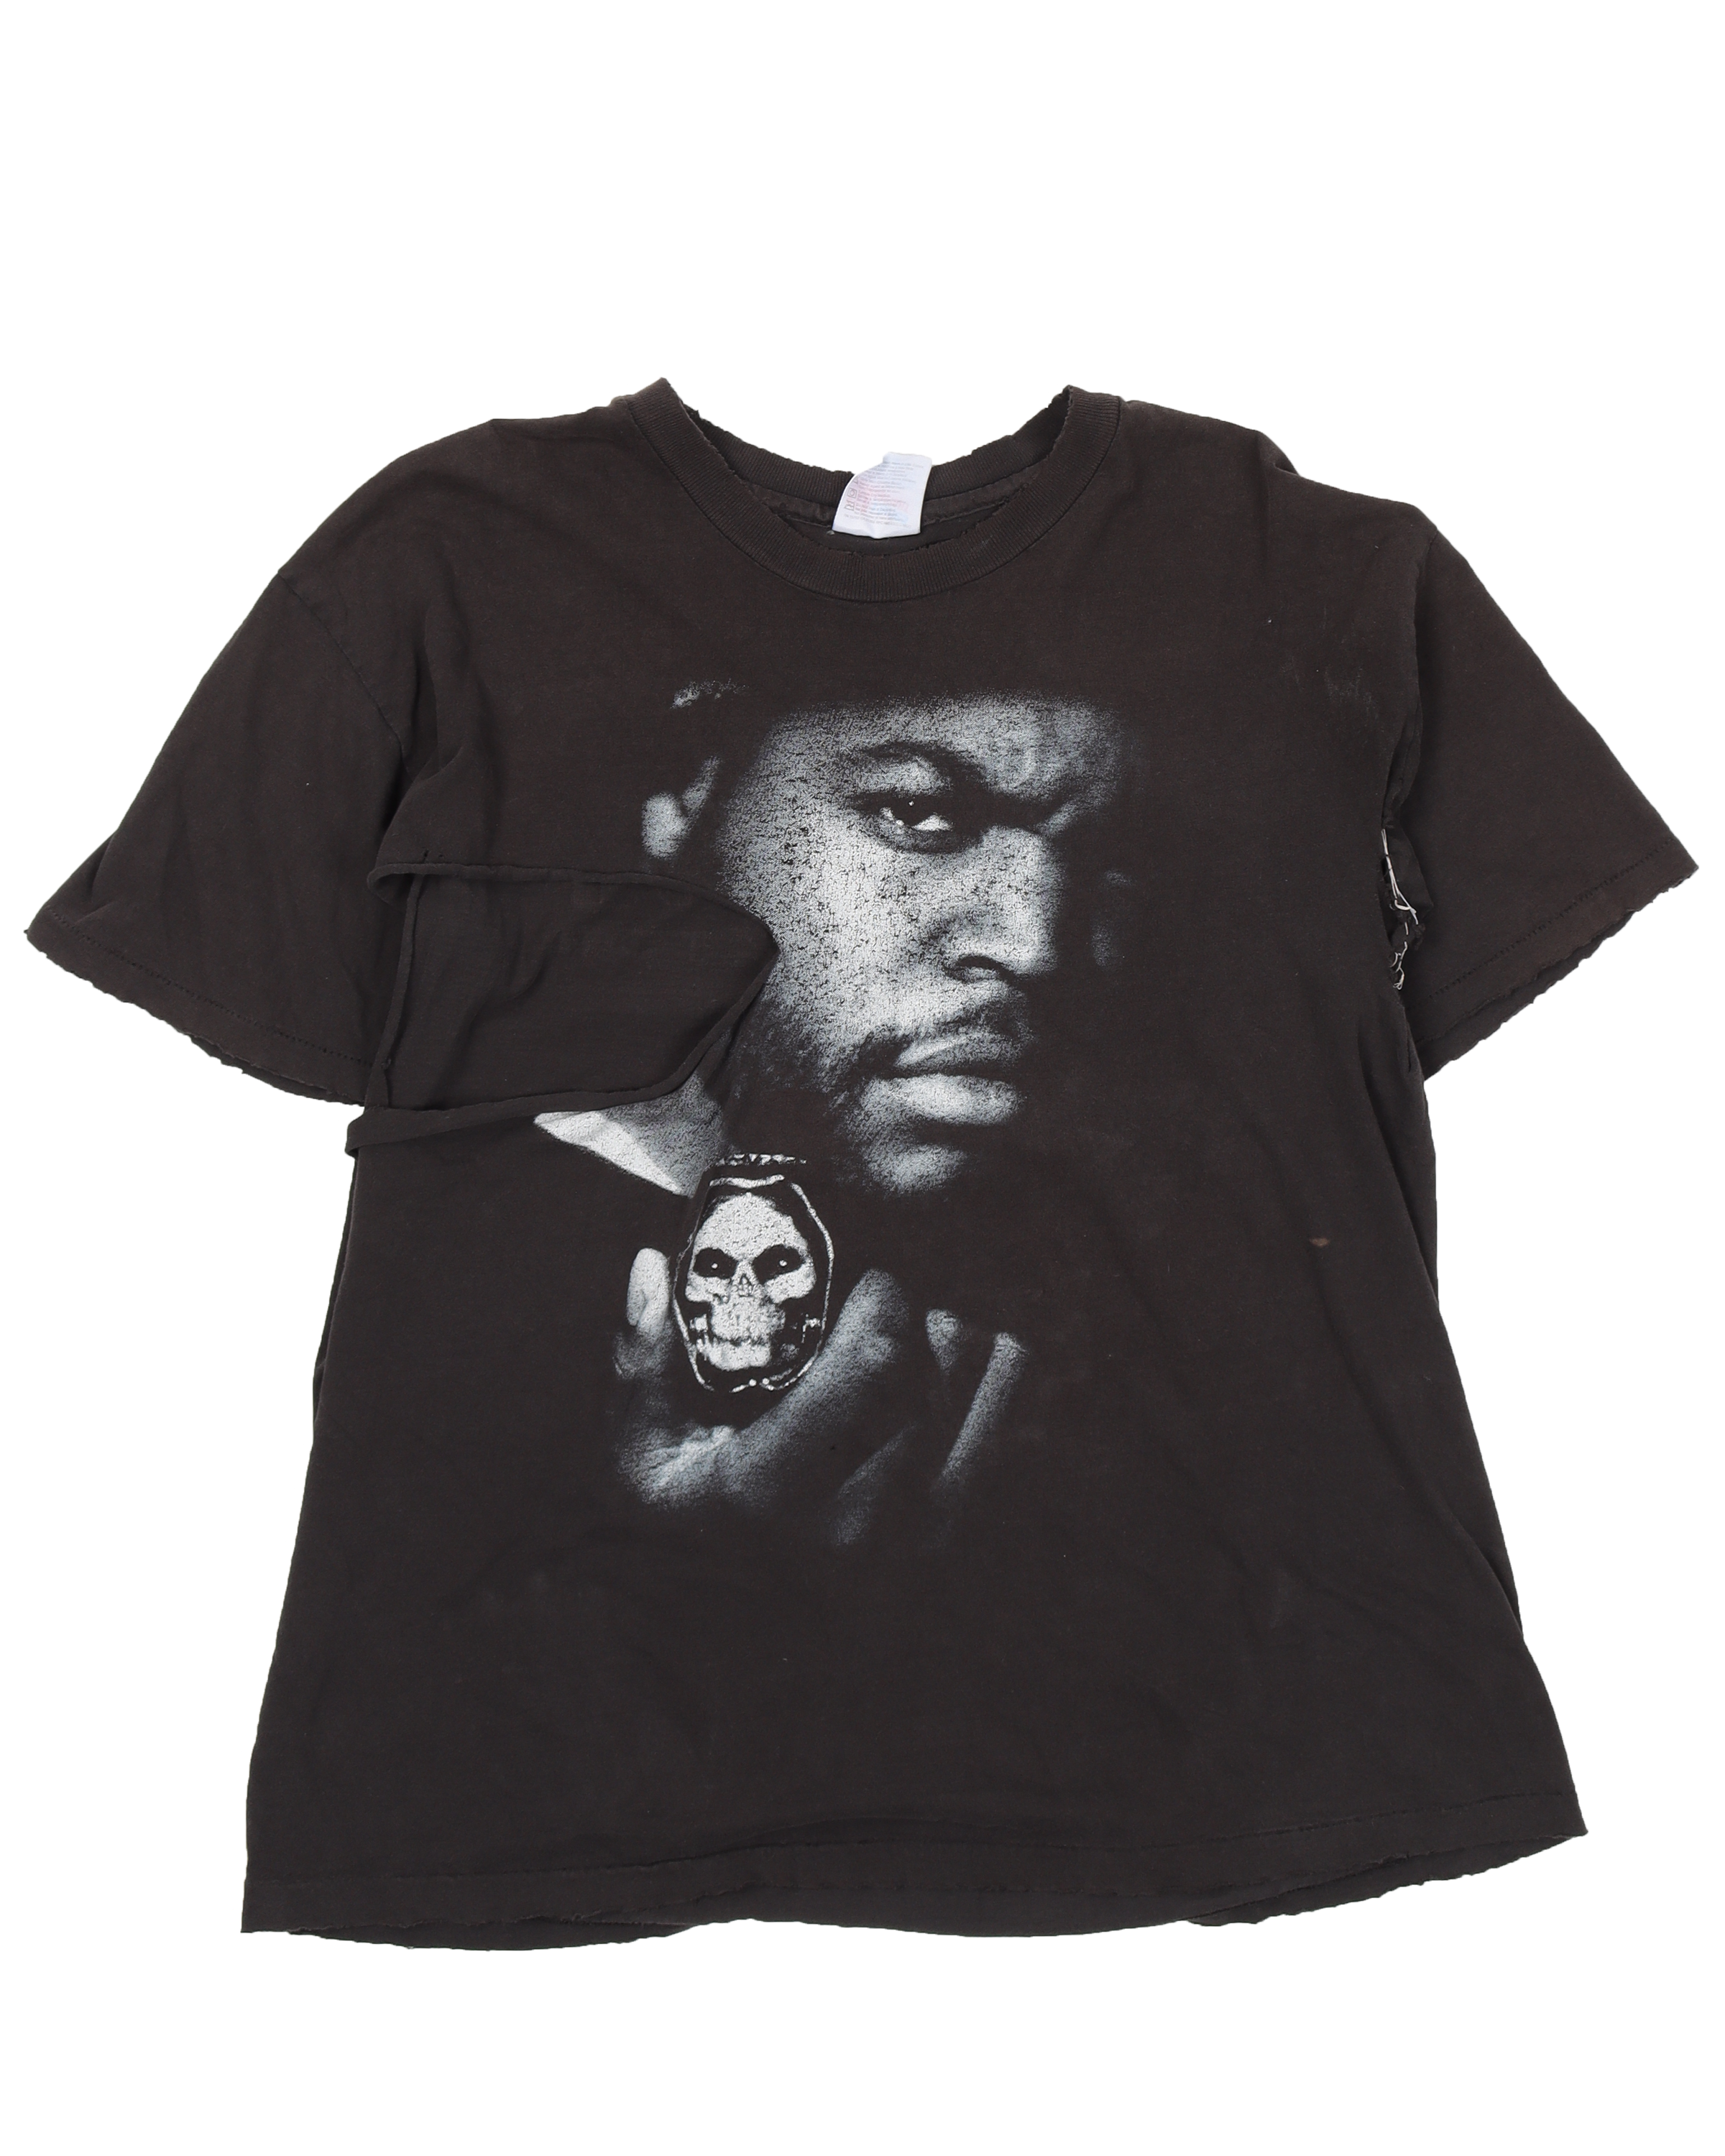 Ice Cube "The Predator" T-Shirt